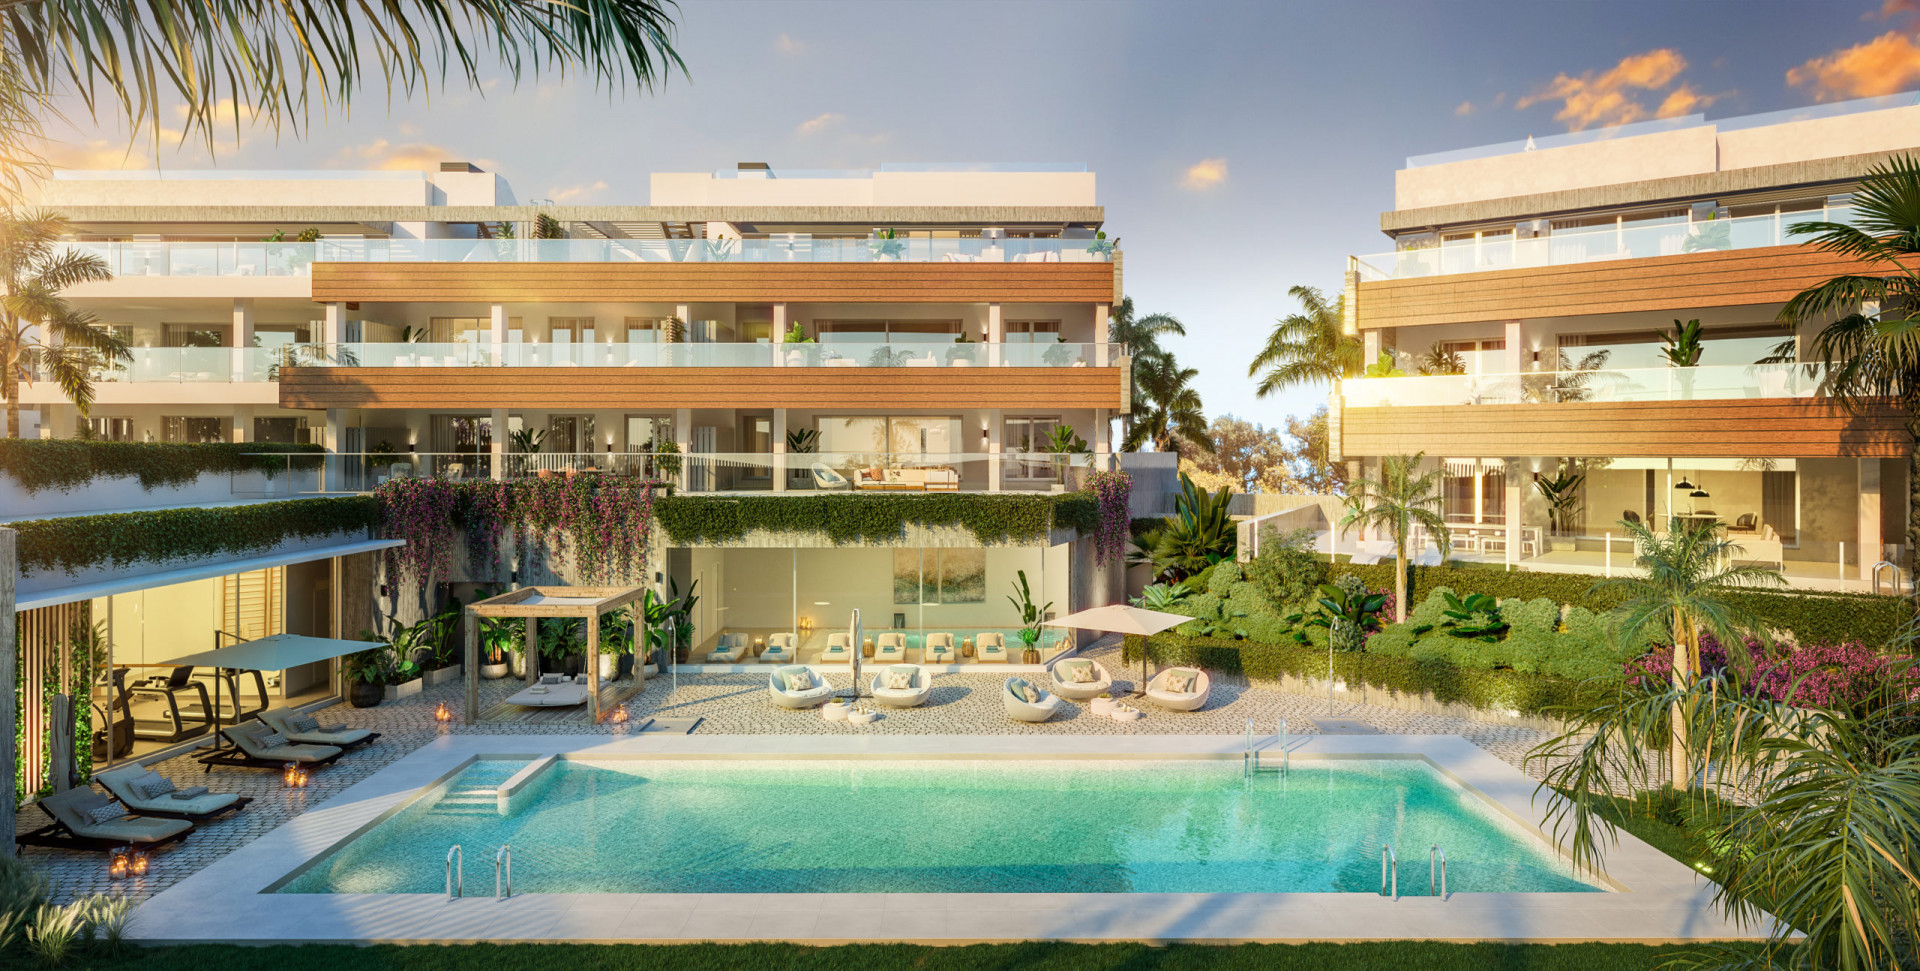 Newly built modern boutique residential complex of apartments for sale in Altos de los Monteros – Marbella